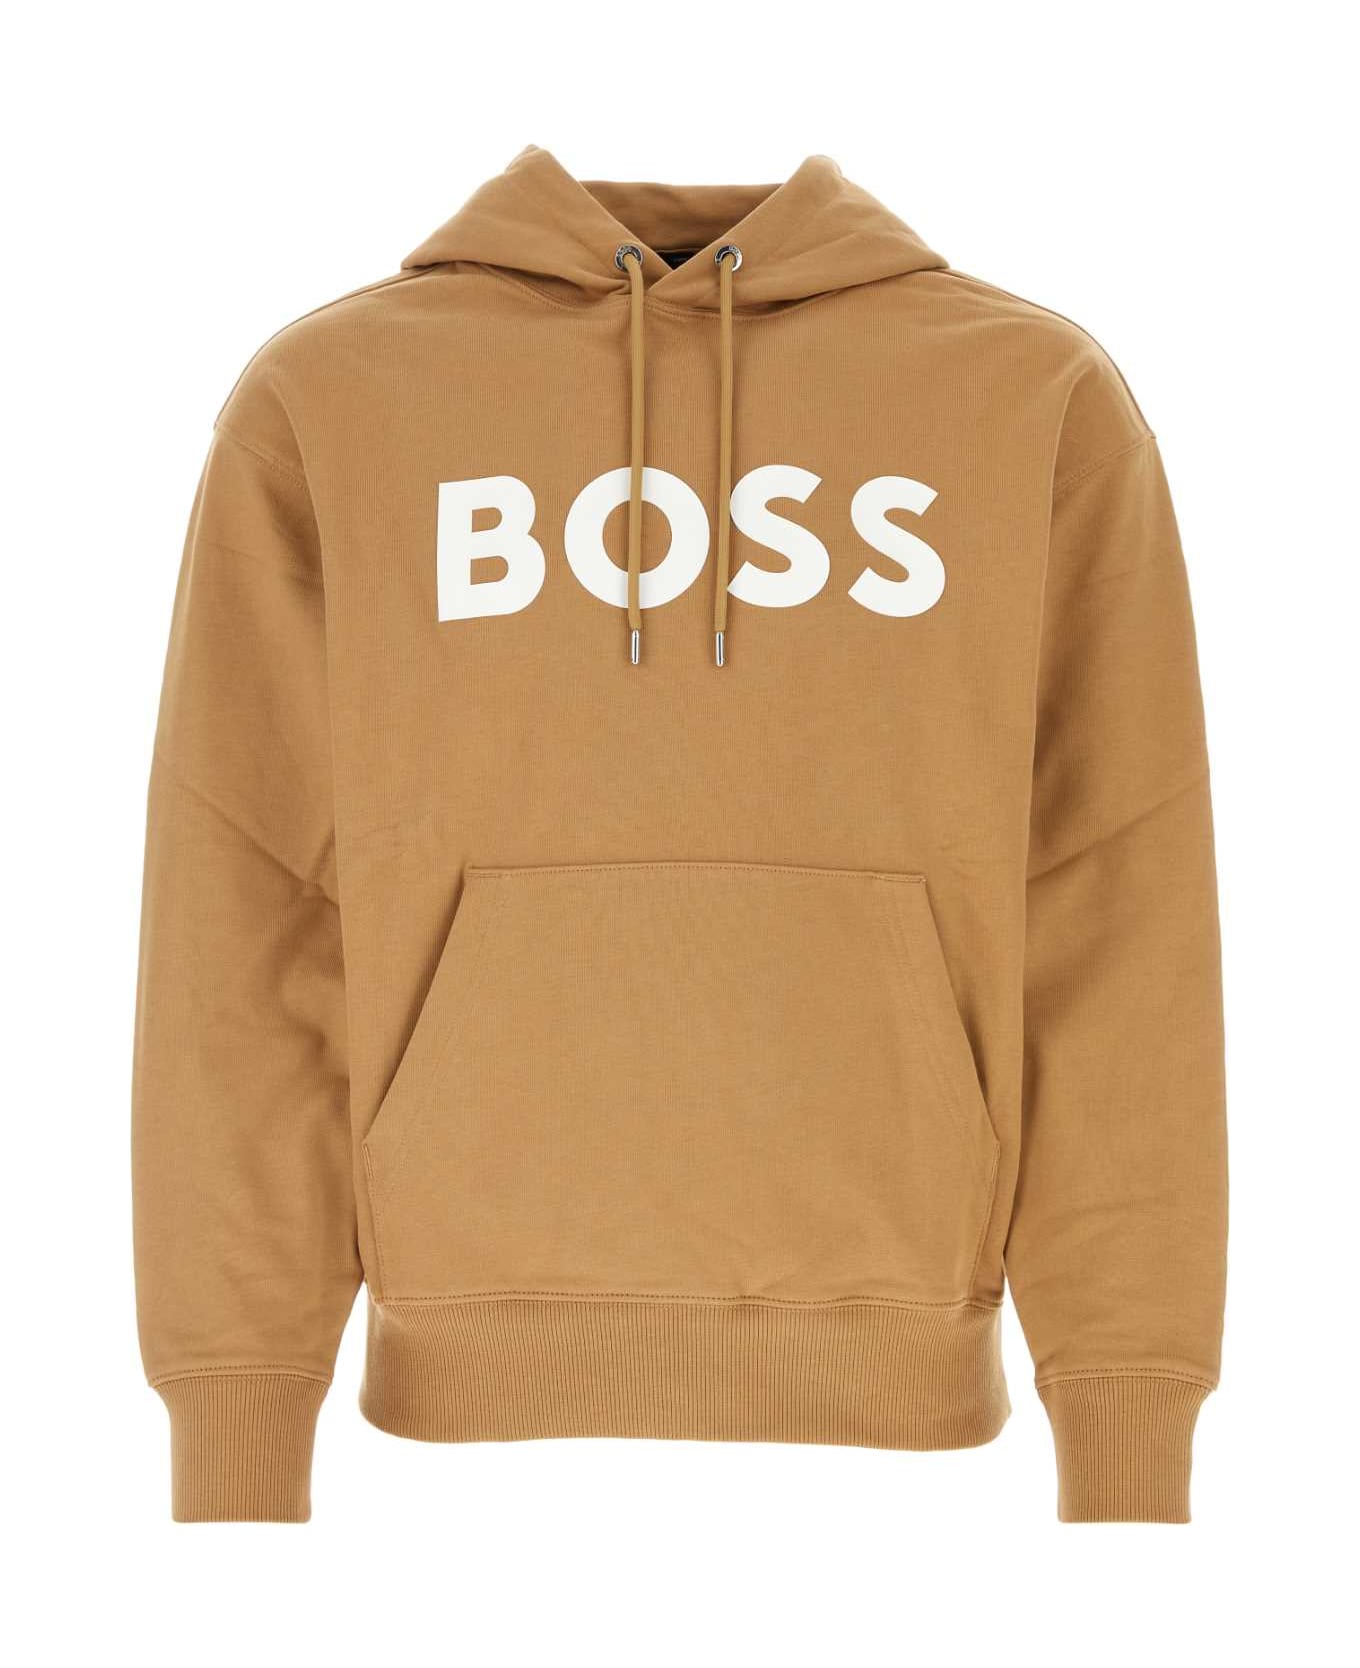 Hugo Boss Camel Cotton Sweatshirt - MEDIUMBEIGE